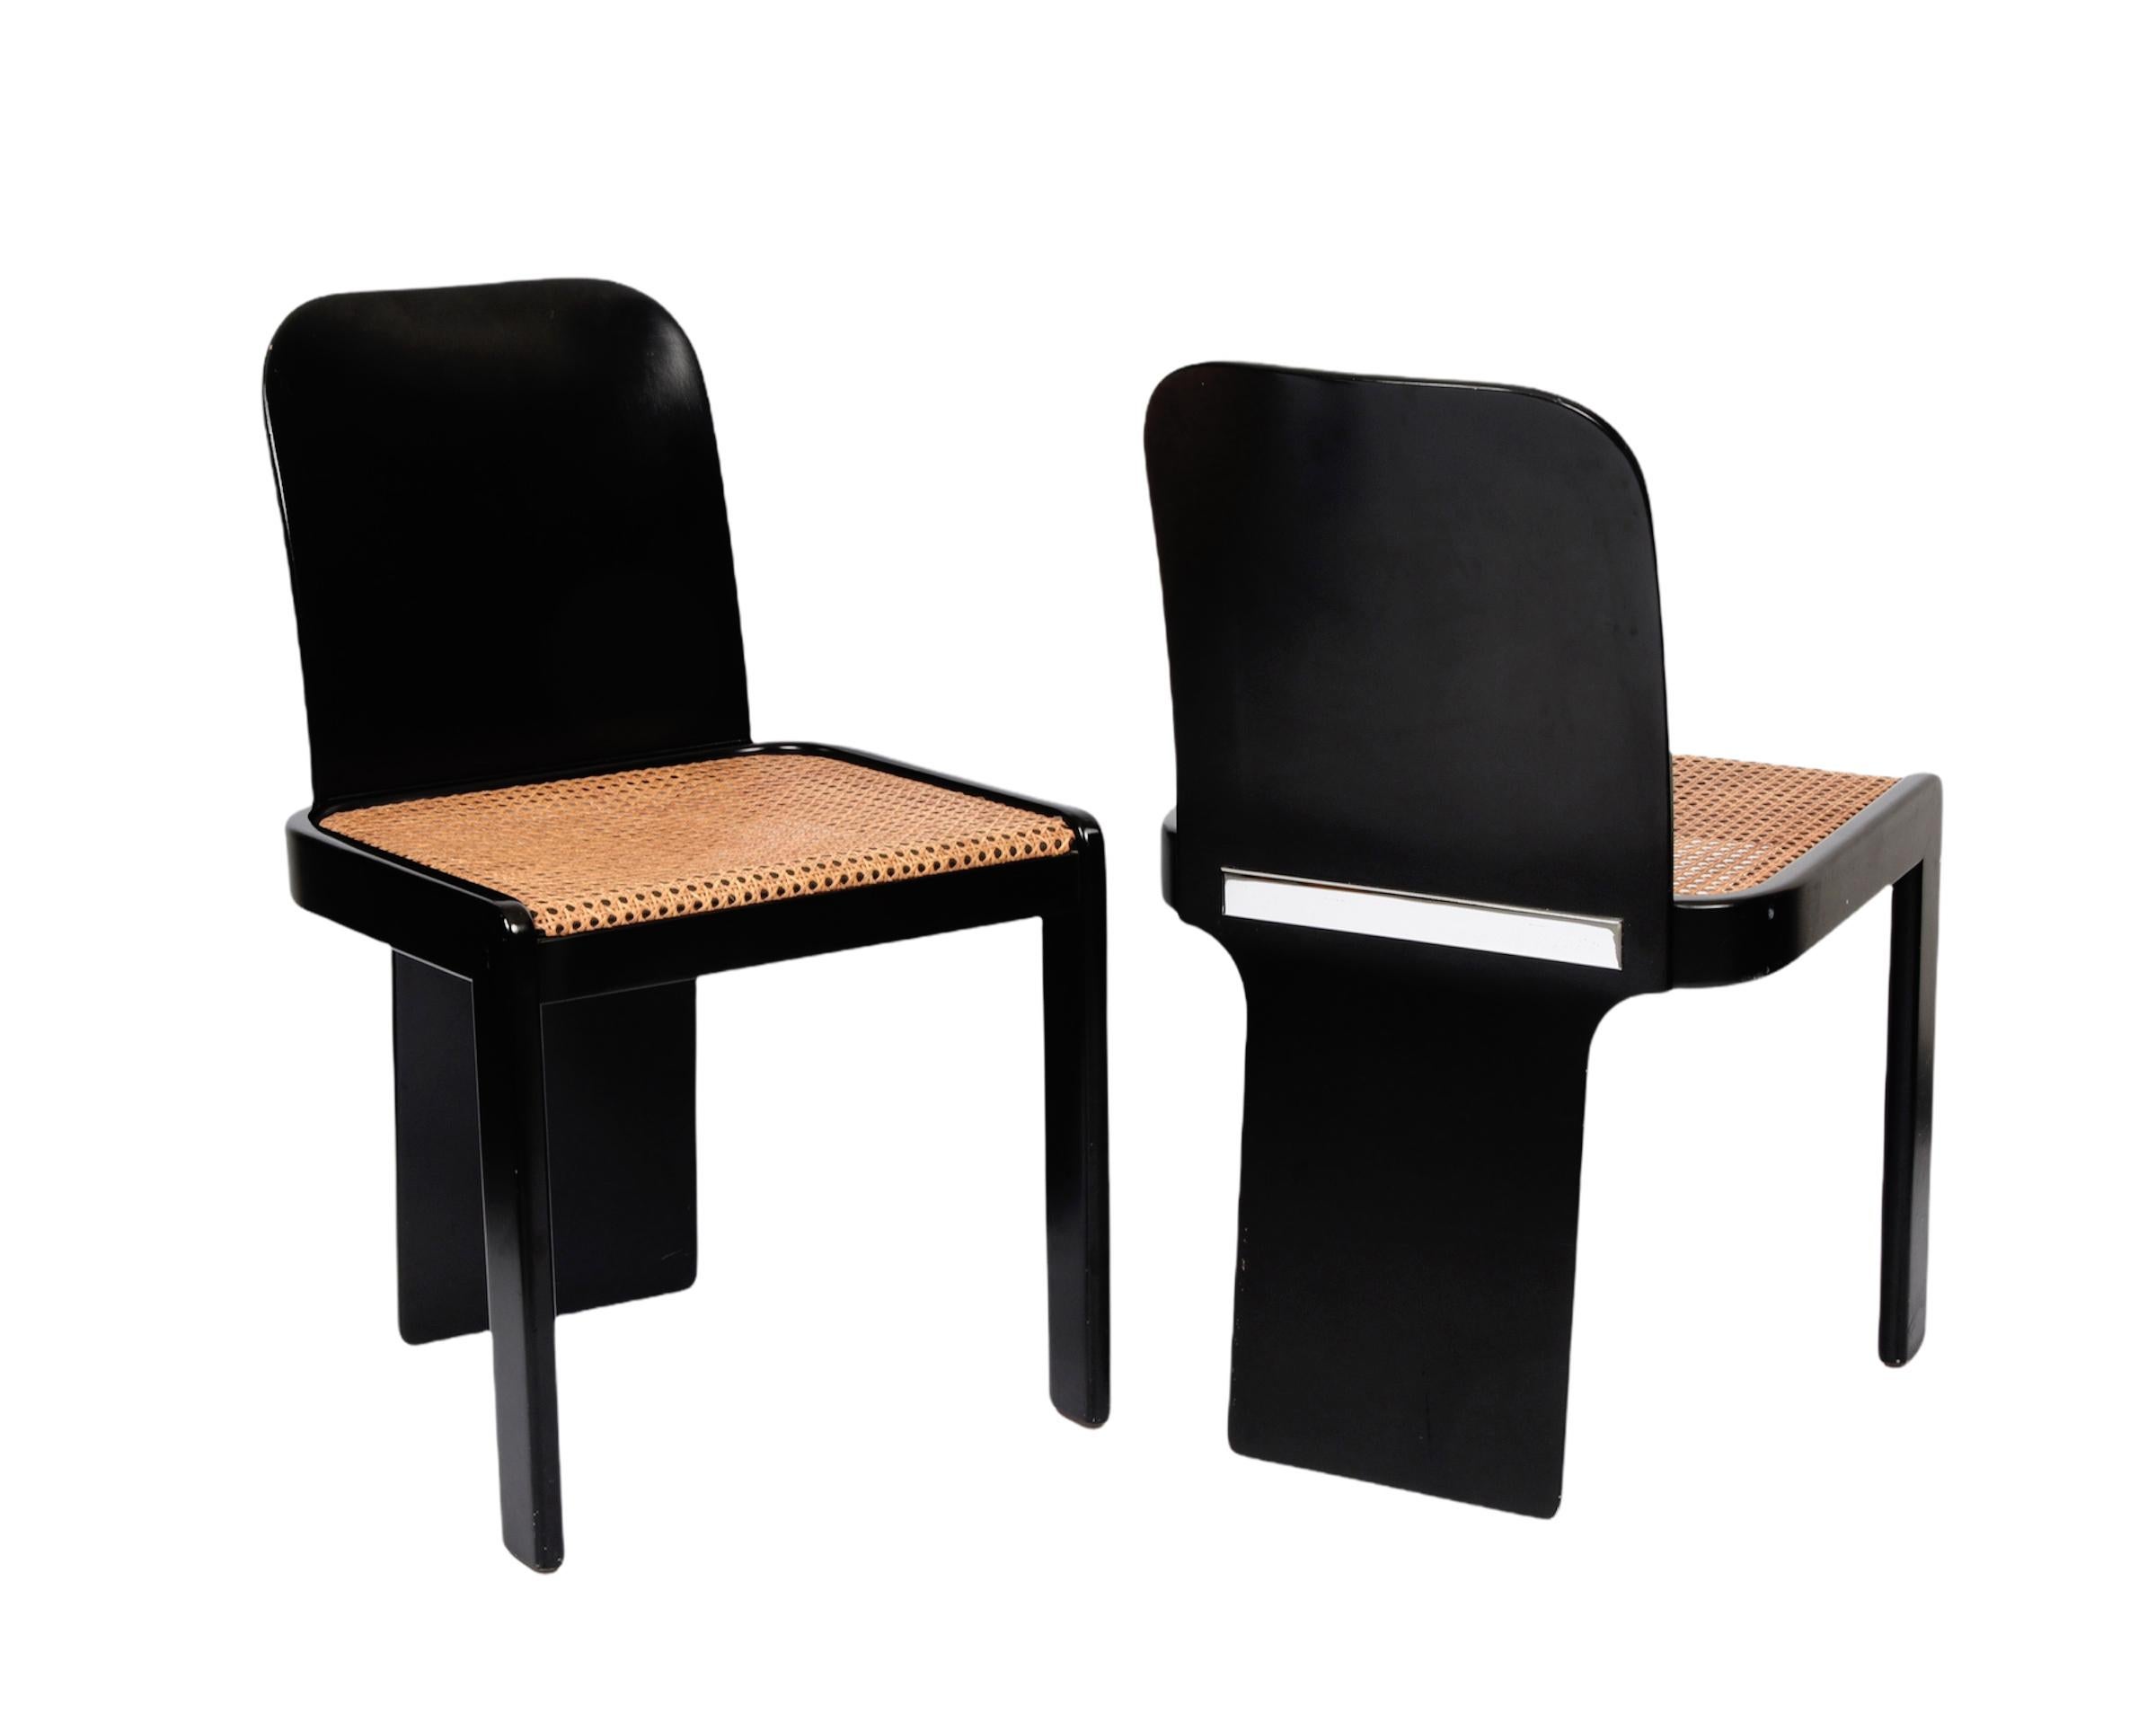 20th Century Pierluigi Molinari Midcentury Black Wood Italian Chairs for Pozzi, 1970s